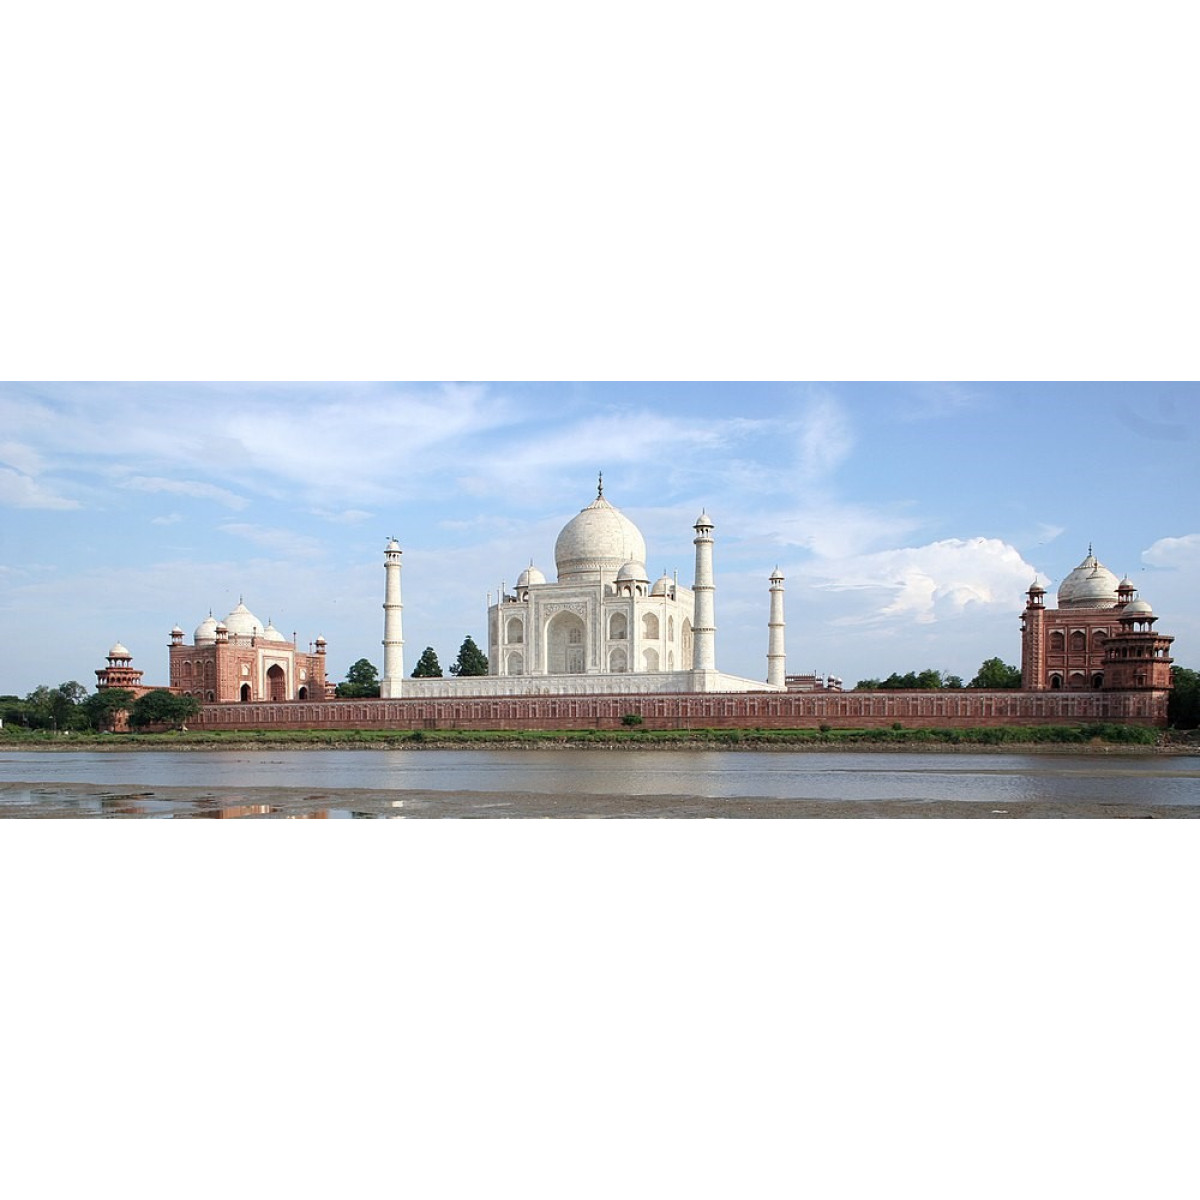 Taj Mahal and its marble inlay art